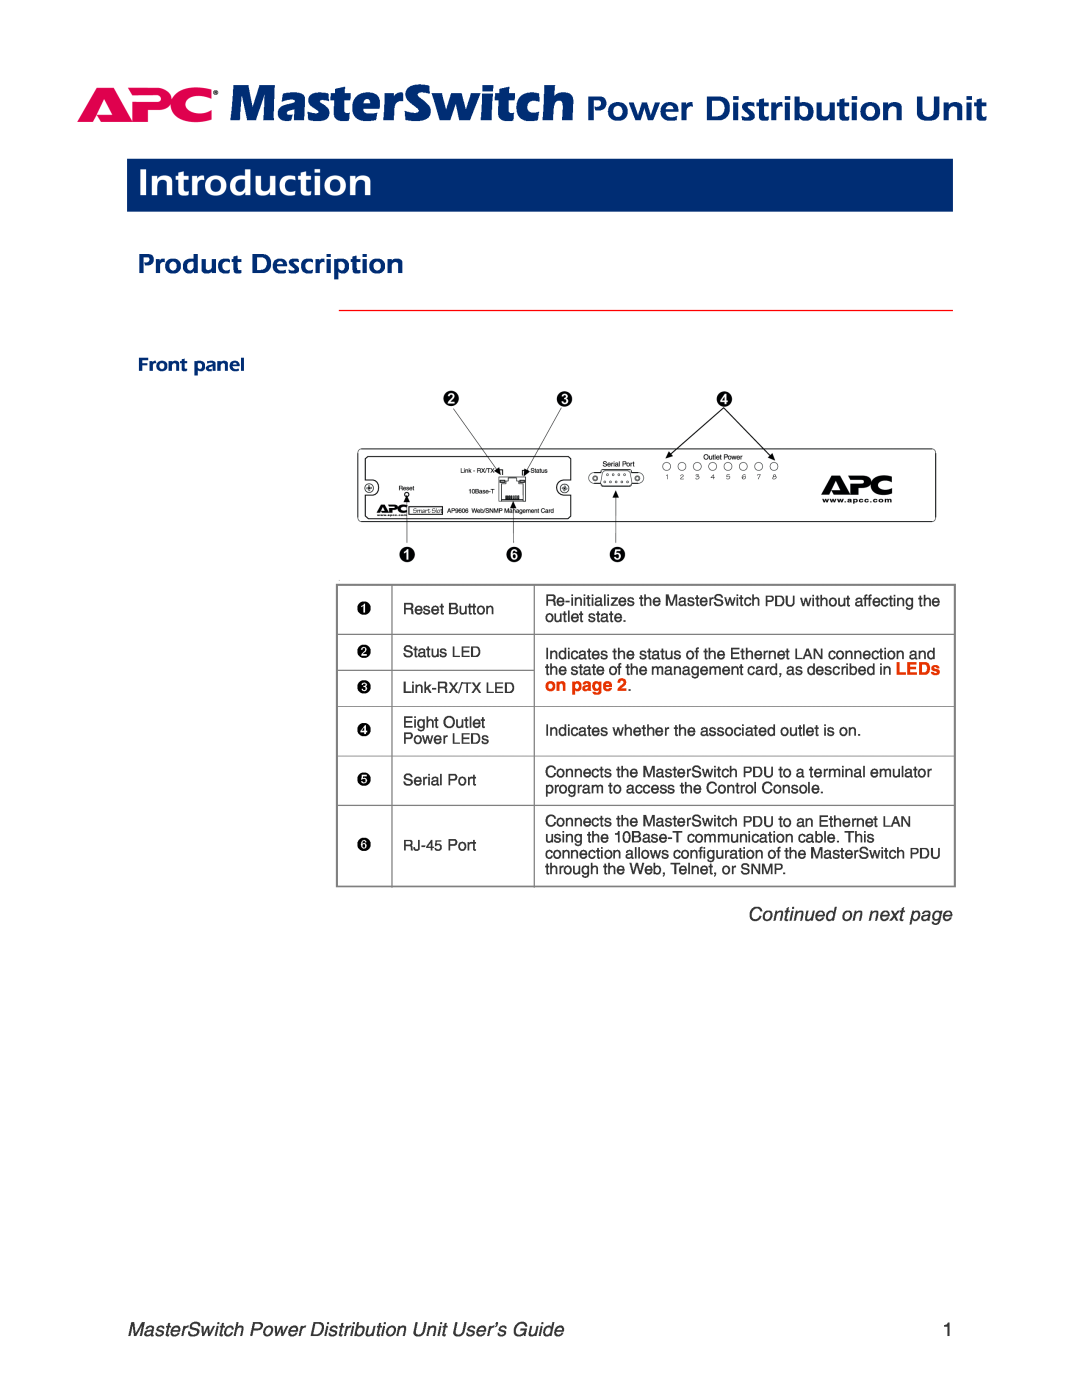 APC AP9211 Introduction, Product Description, Front panel, Continued on next page, MasterSwitch Power Distribution Unit 